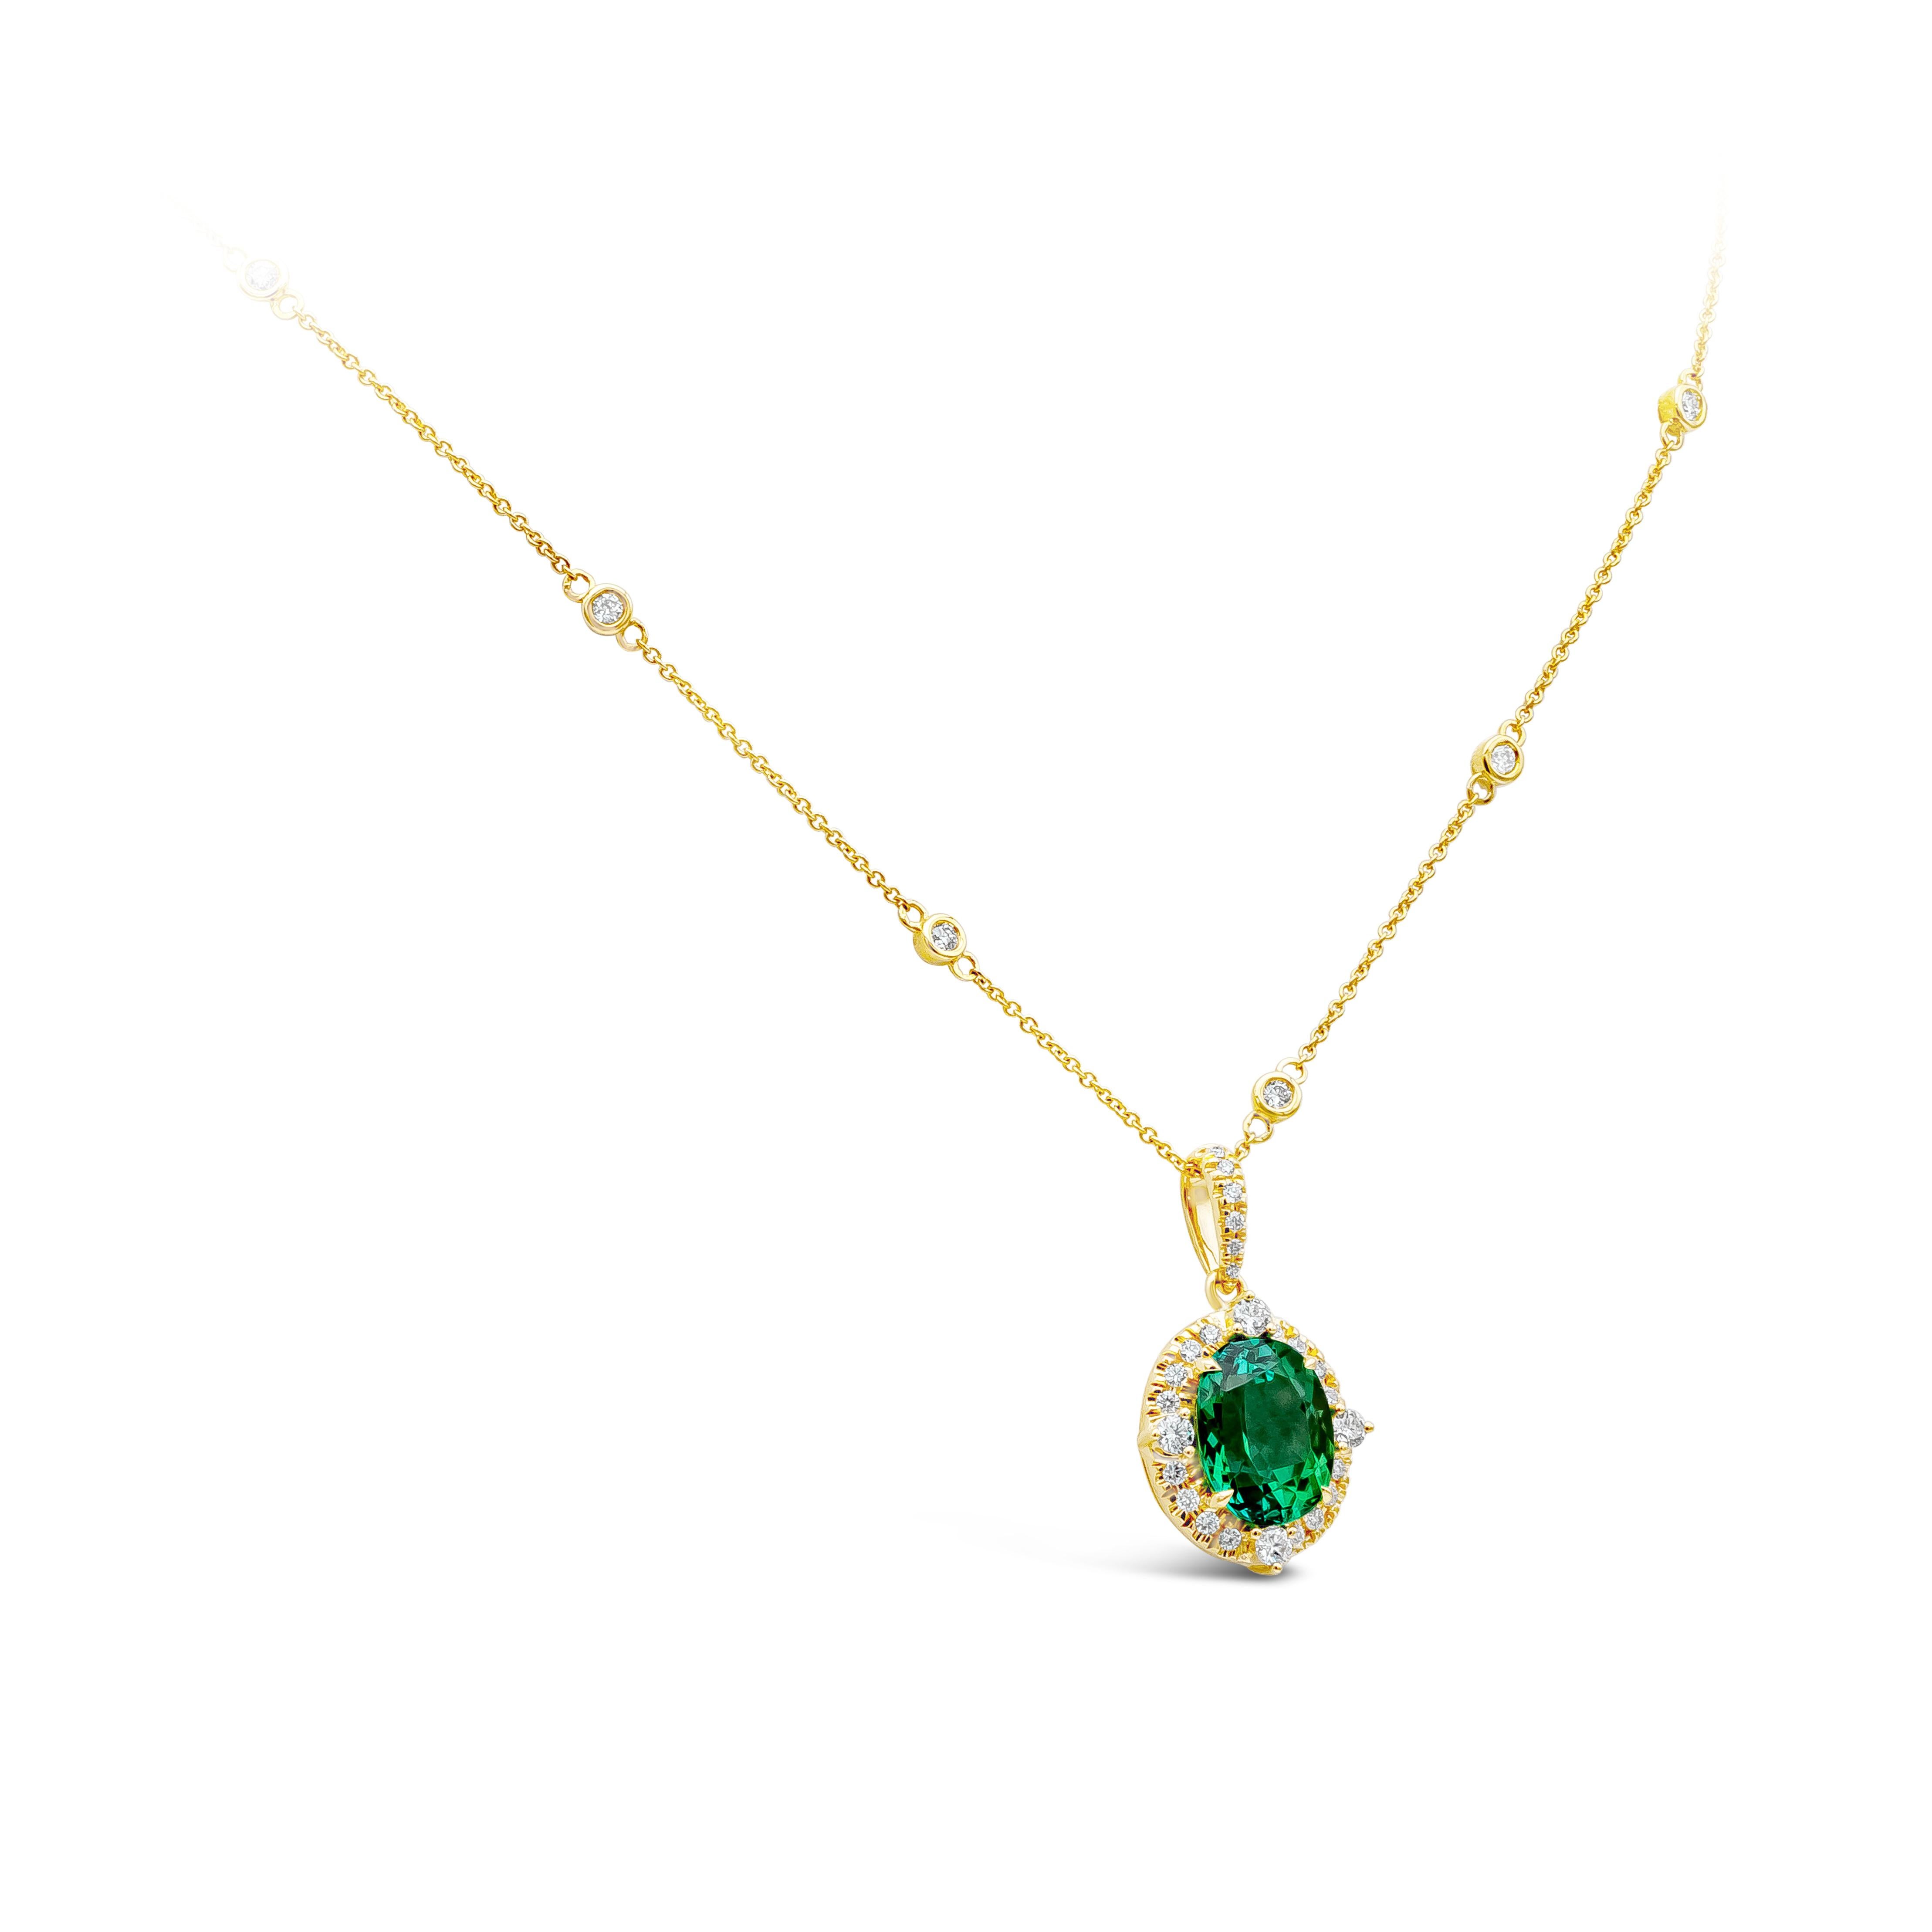 Contemporary 4.92 Carat Oval Cut Green Tourmaline and Diamond Pendant Necklace For Sale